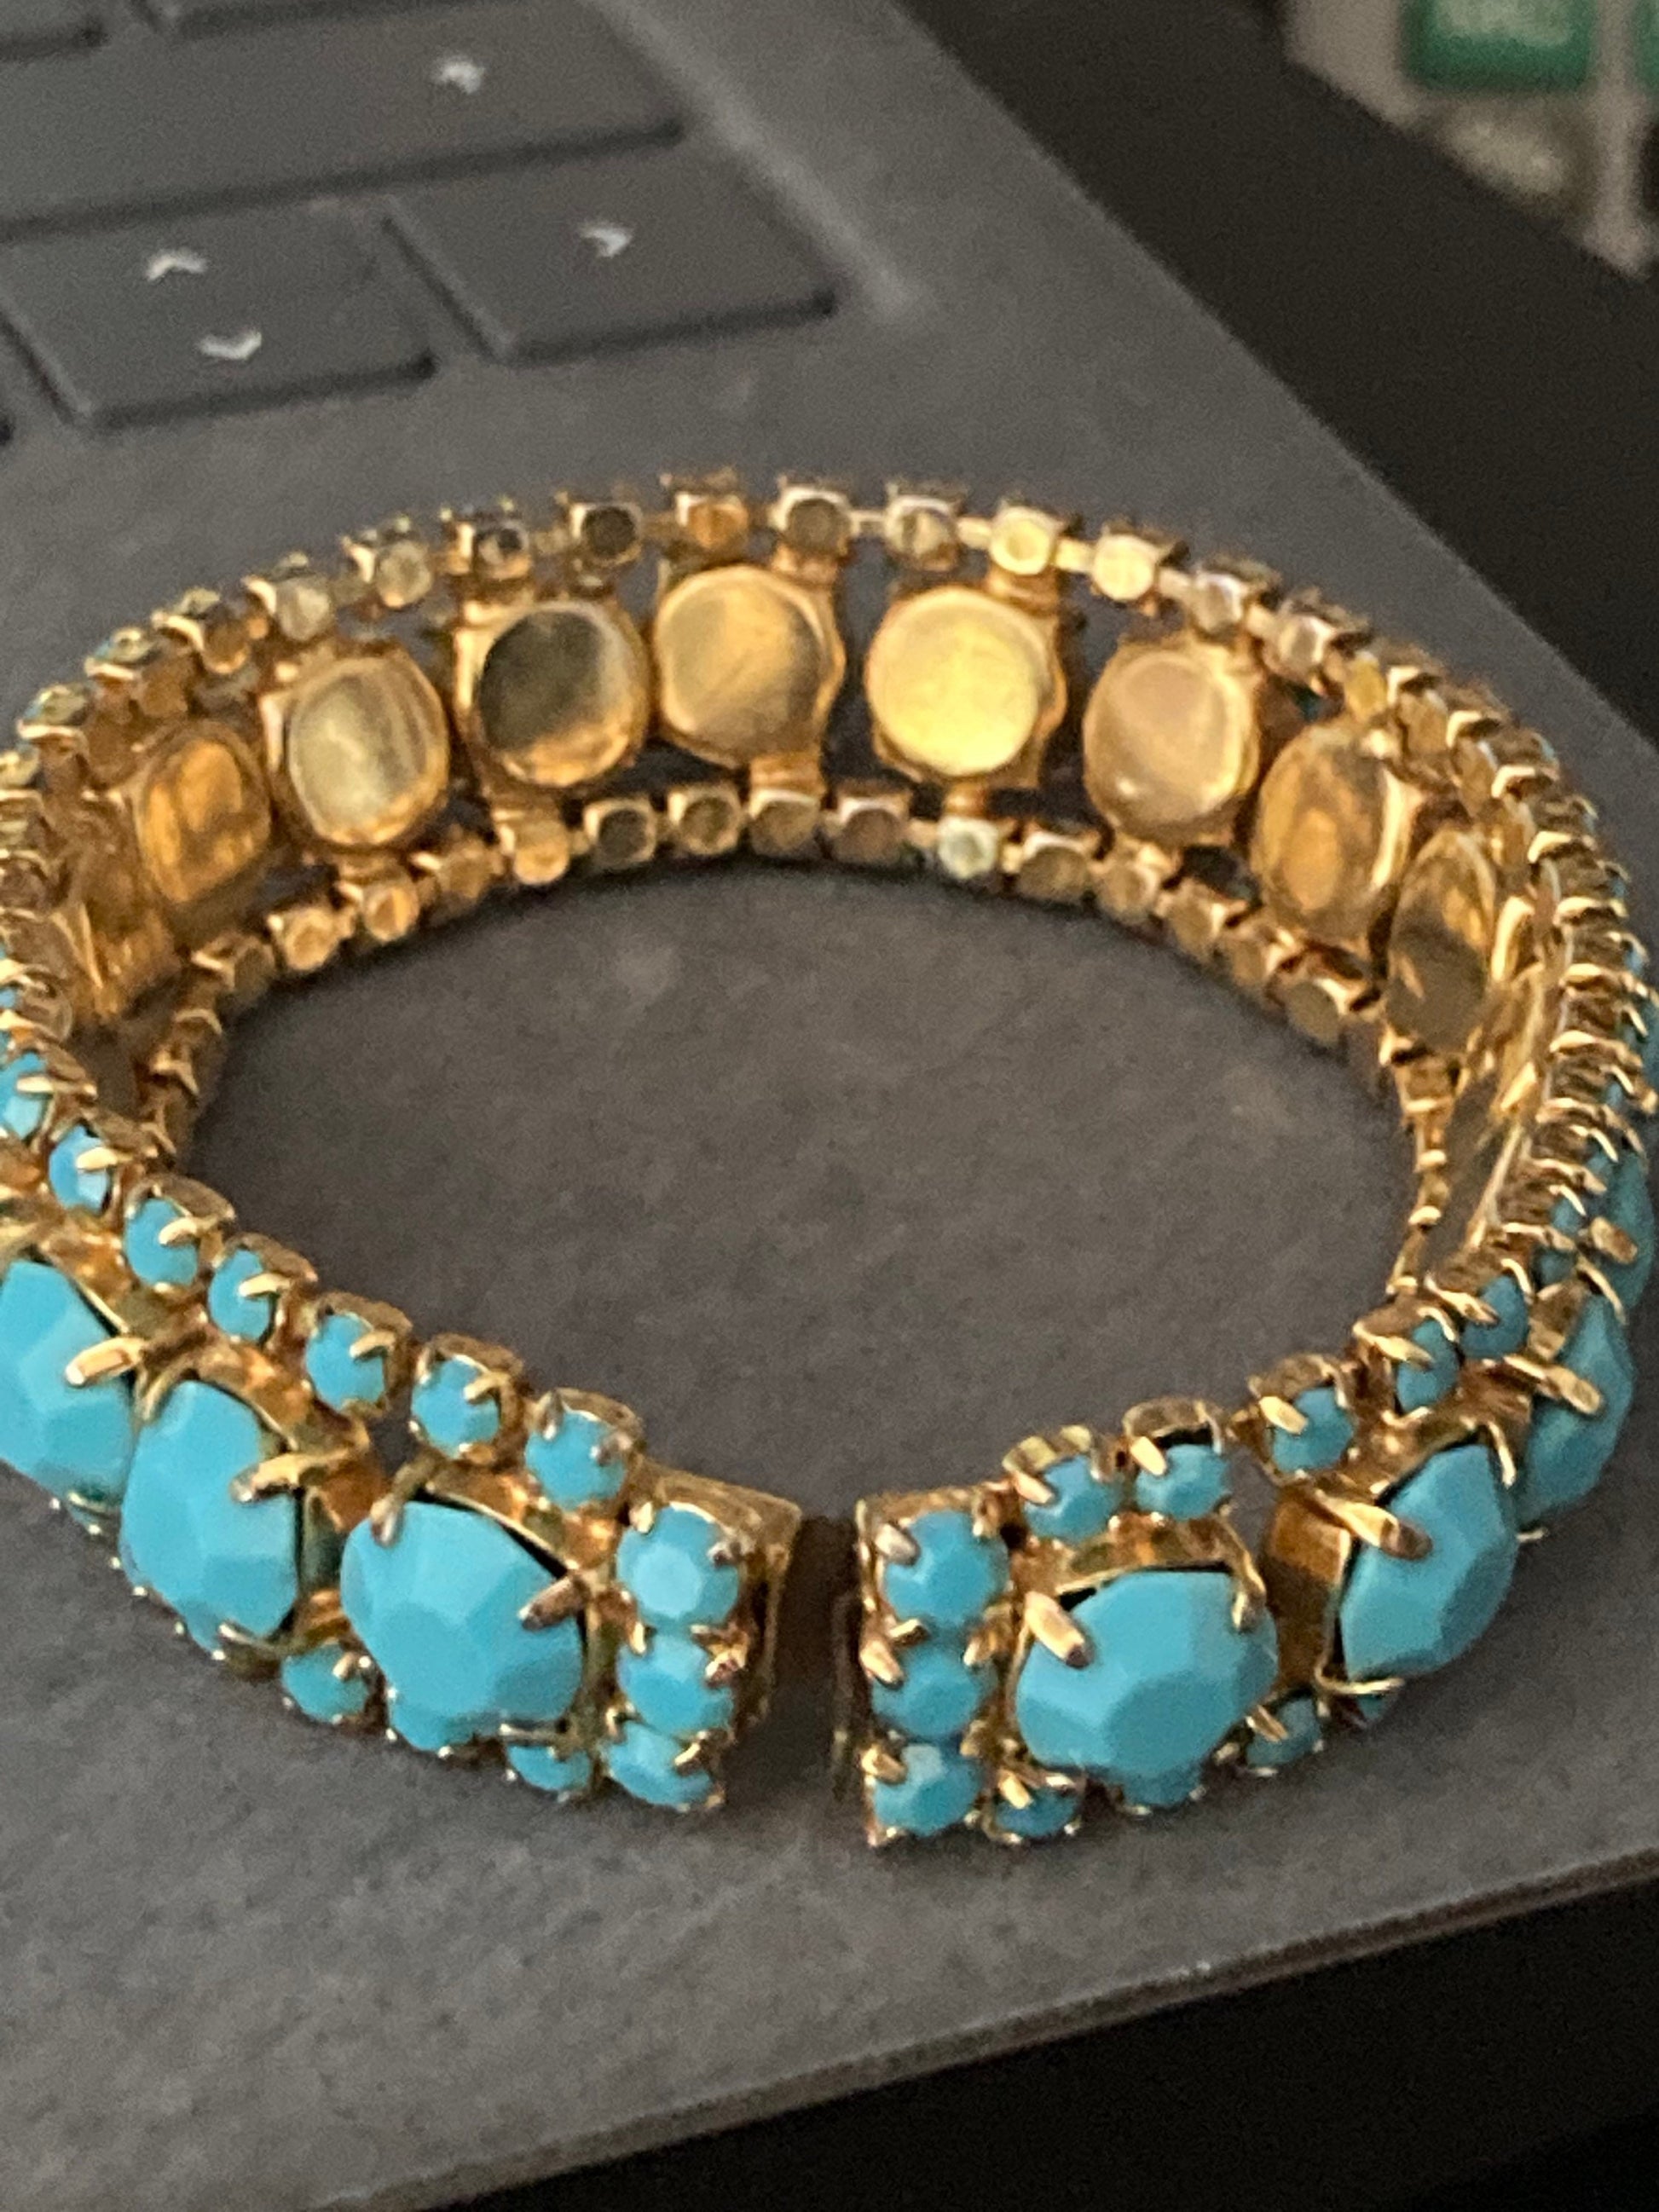 Vintage 1960s 1970s gold tone turquoise rhinestone paste bracelet 19.5 cm long x 1cm wide